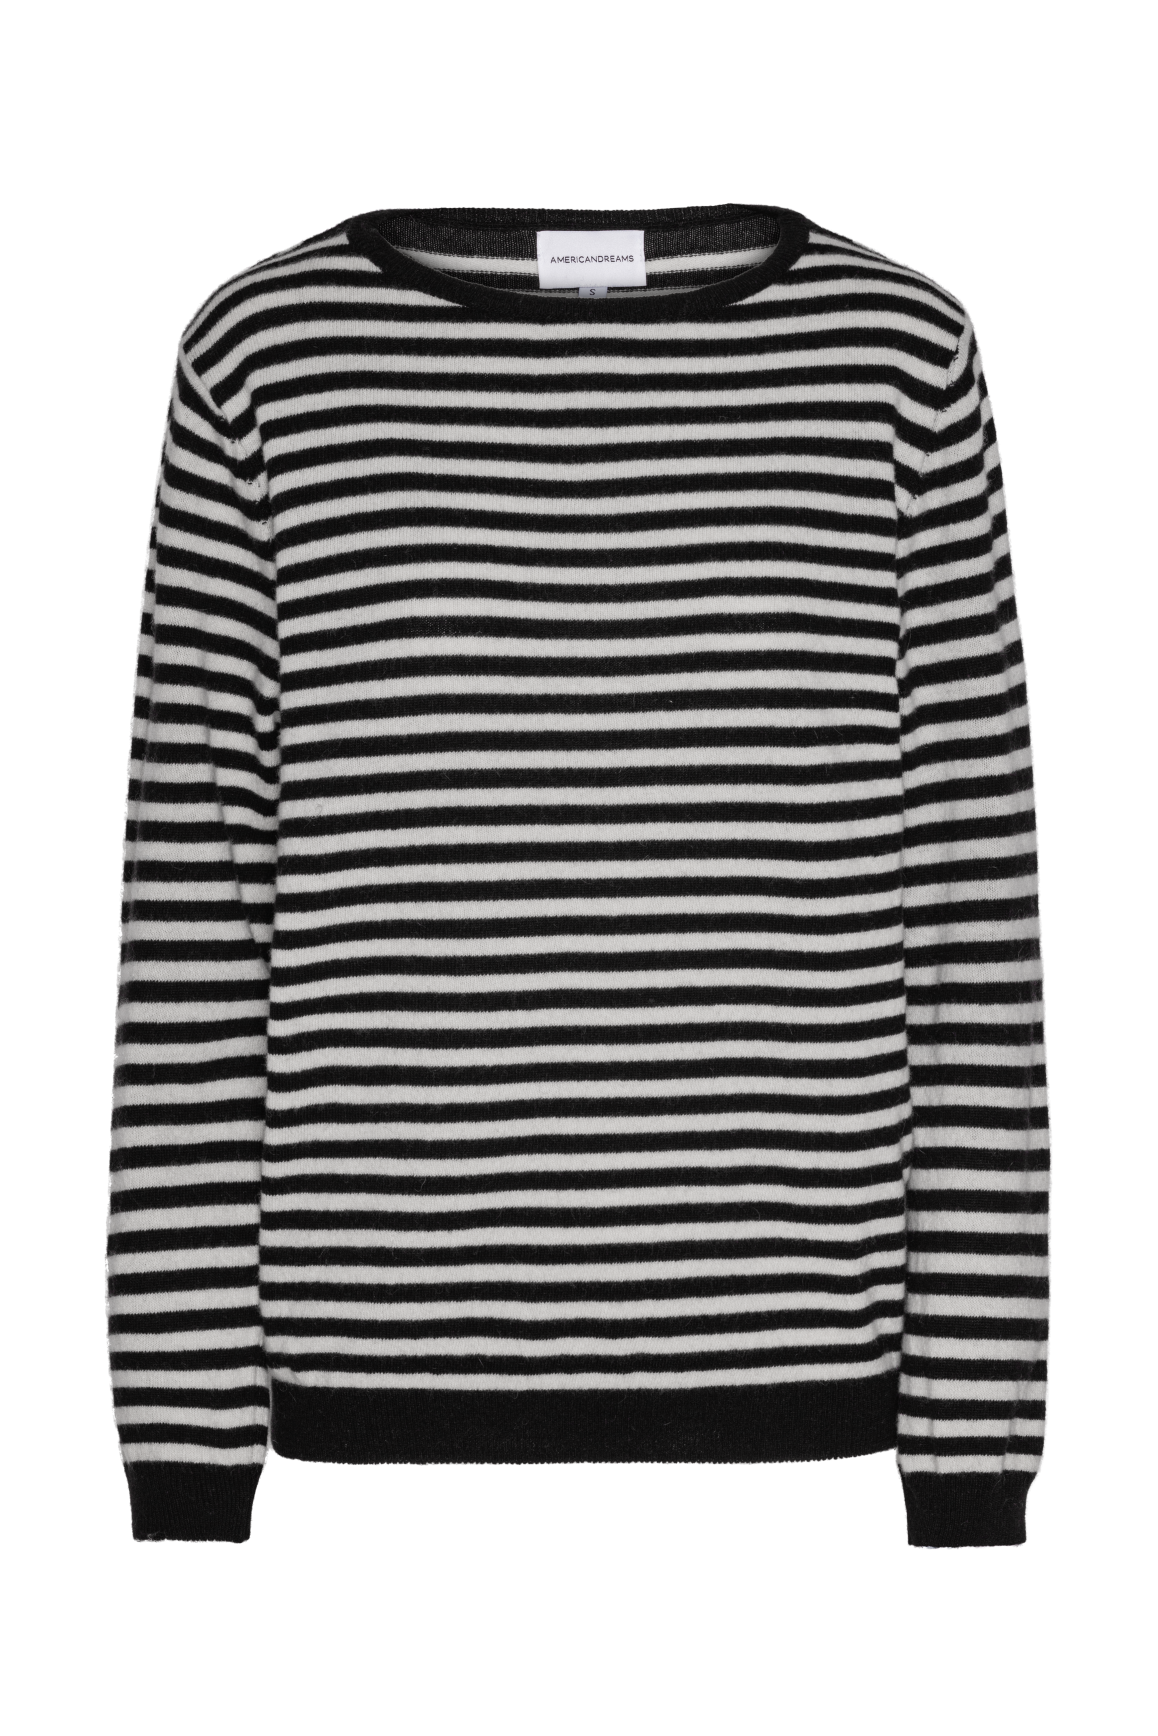 Christy Round Neck Cashmere Pullover Black / White